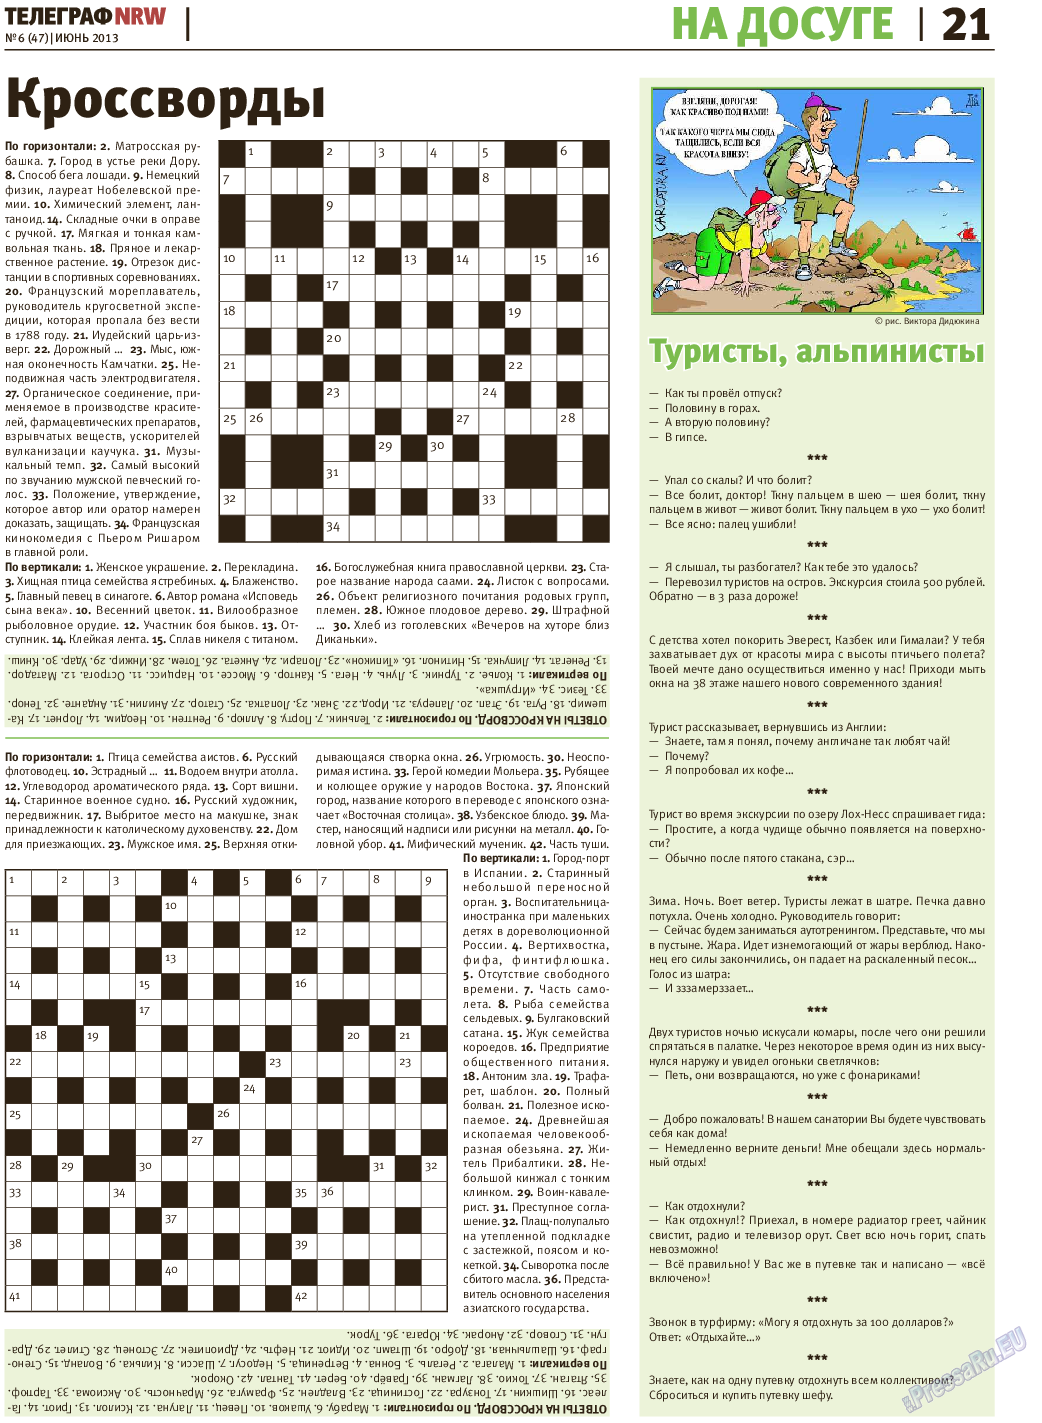 Телеграф NRW, газета. 2013 №6 стр.21